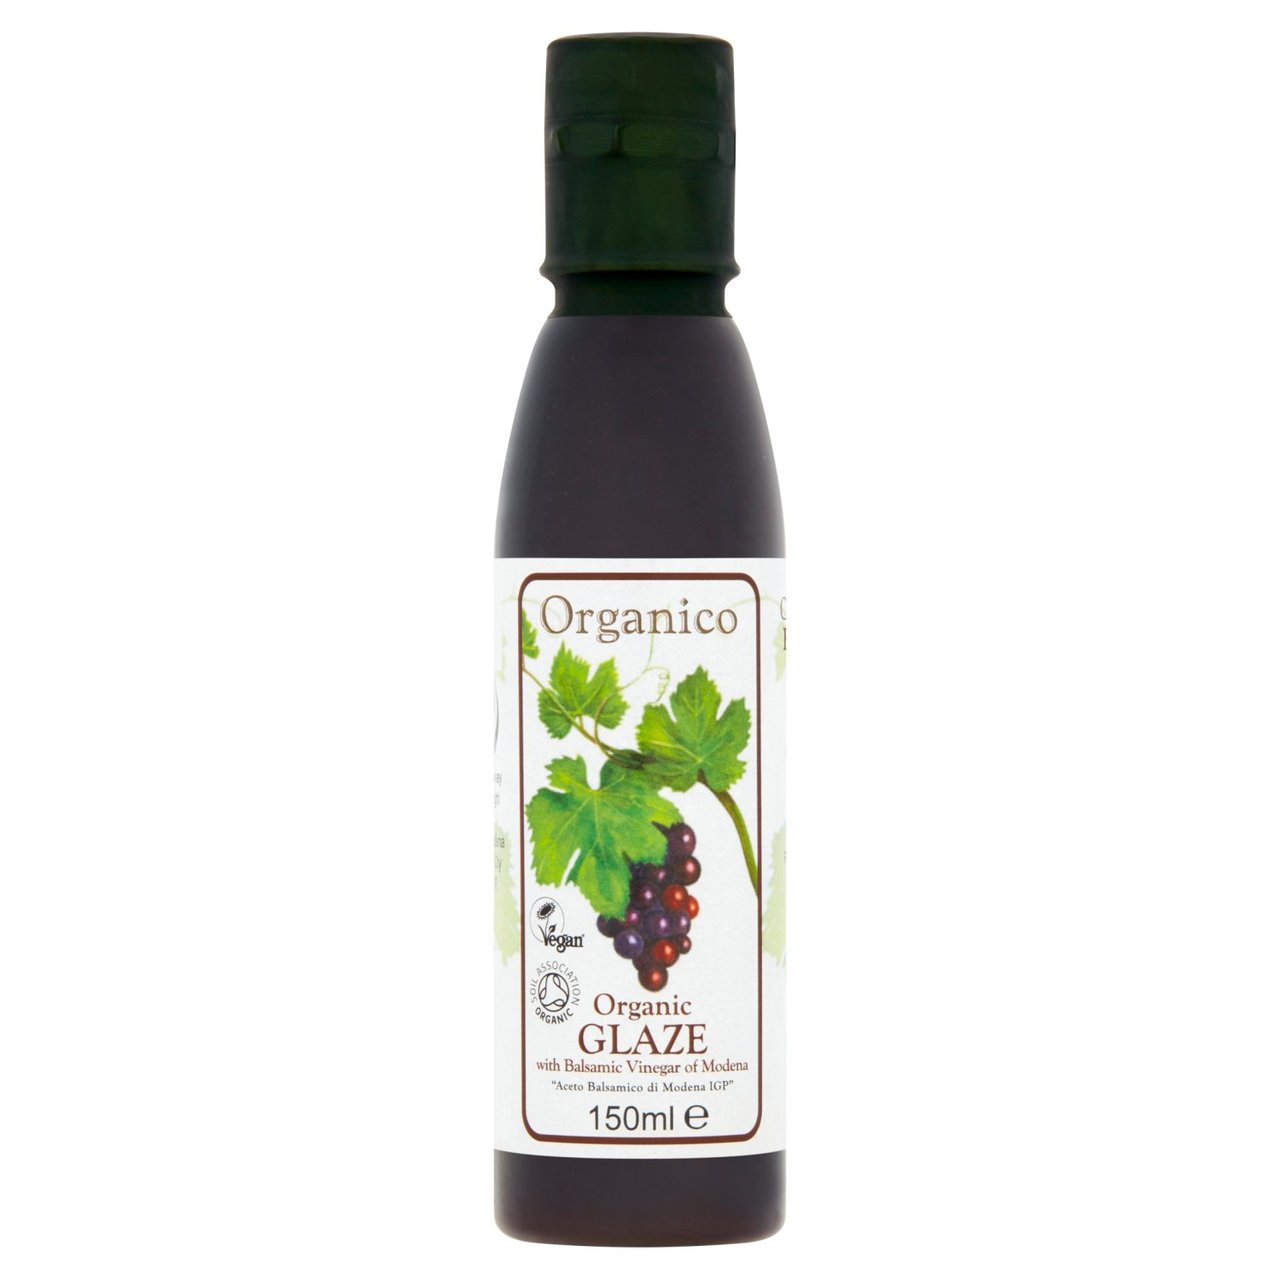 Organico Balsamic Vinegar di Modena Glaze